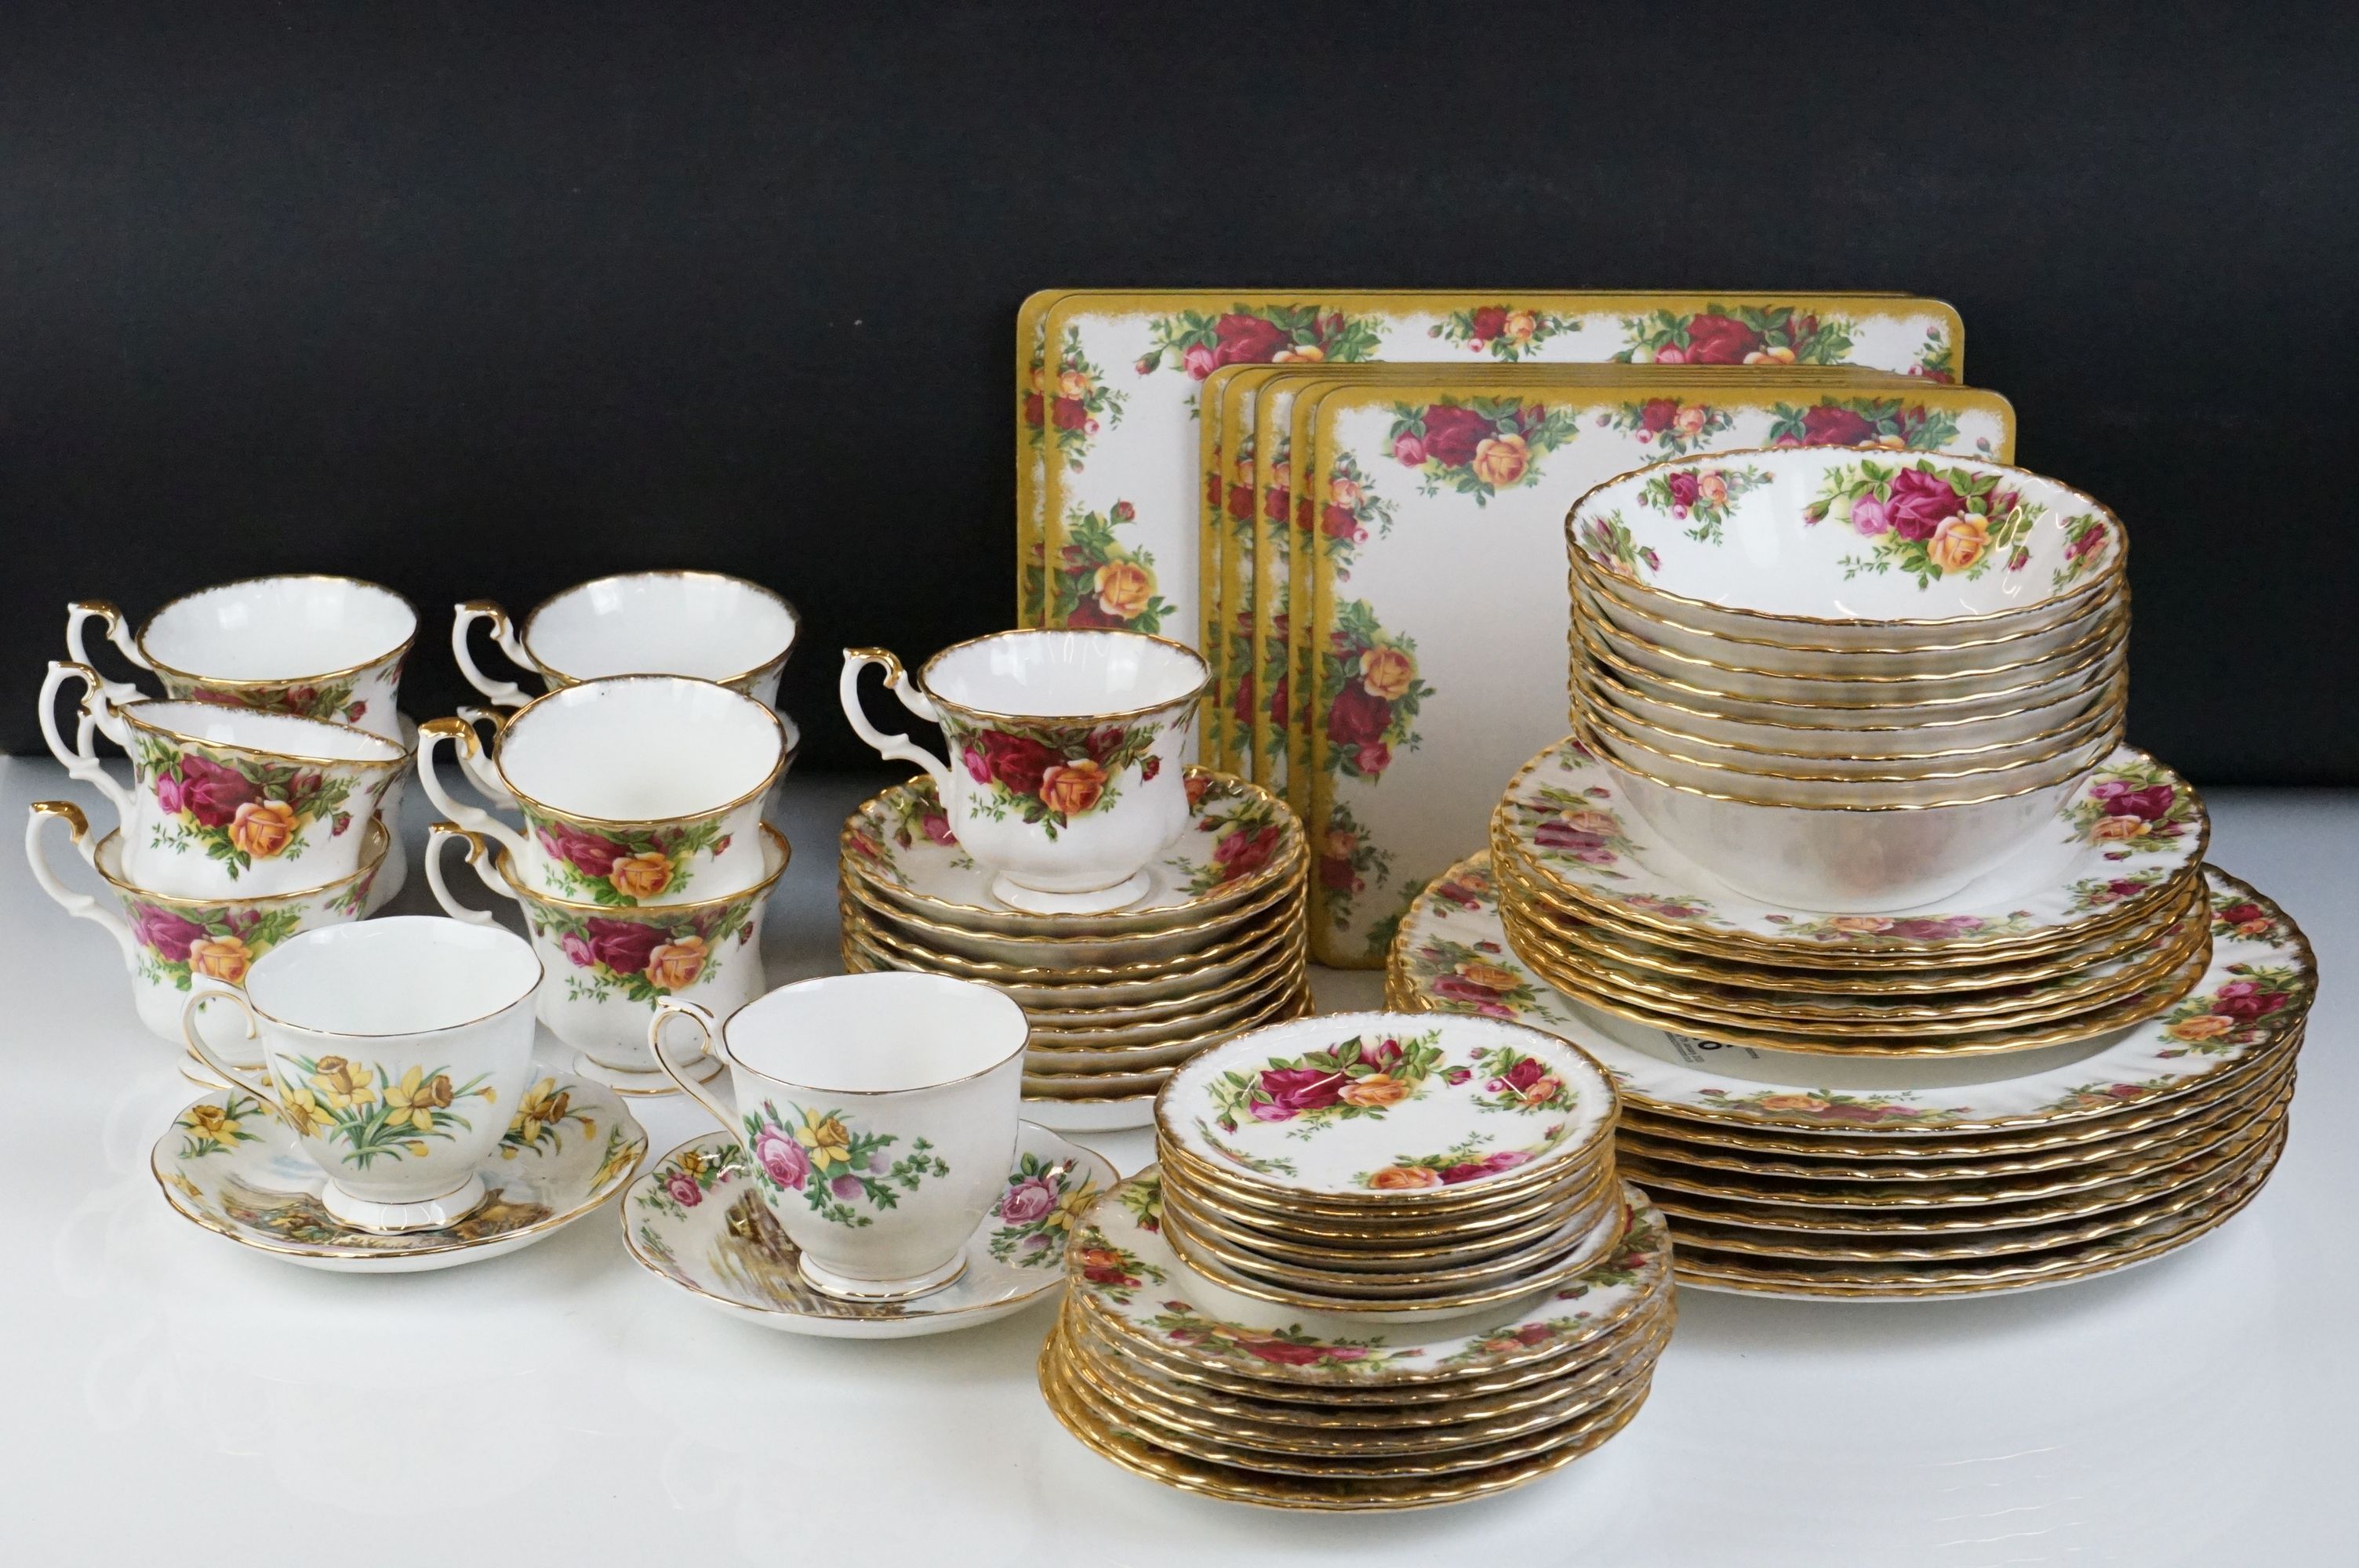 Royal Albert ' Old Country Roses ' pattern ceramics, comprising 9 teacups & saucers, 8 tea plates, 8